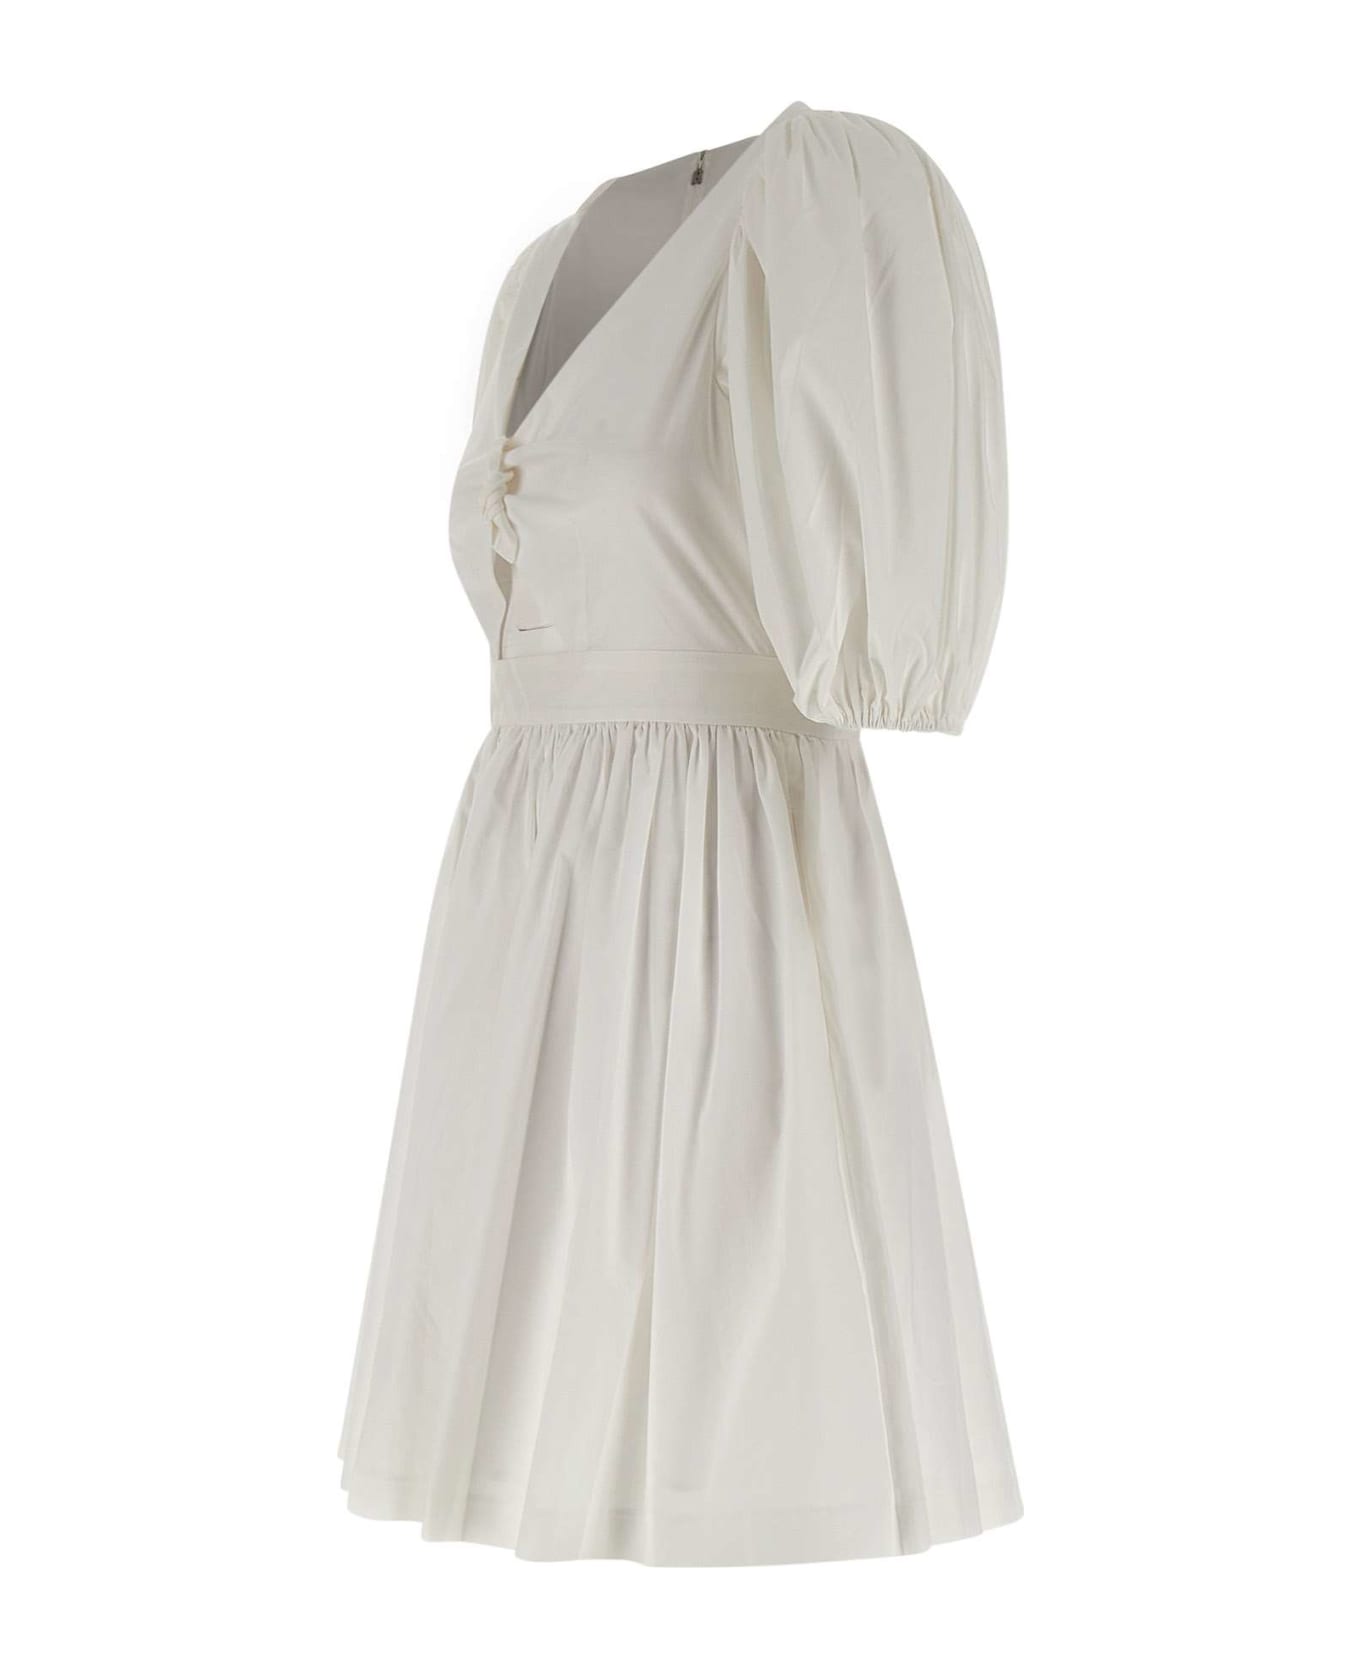 Rotate by Birger Christensen "puff Sleeve Mini " Cotton Dress - WHITE